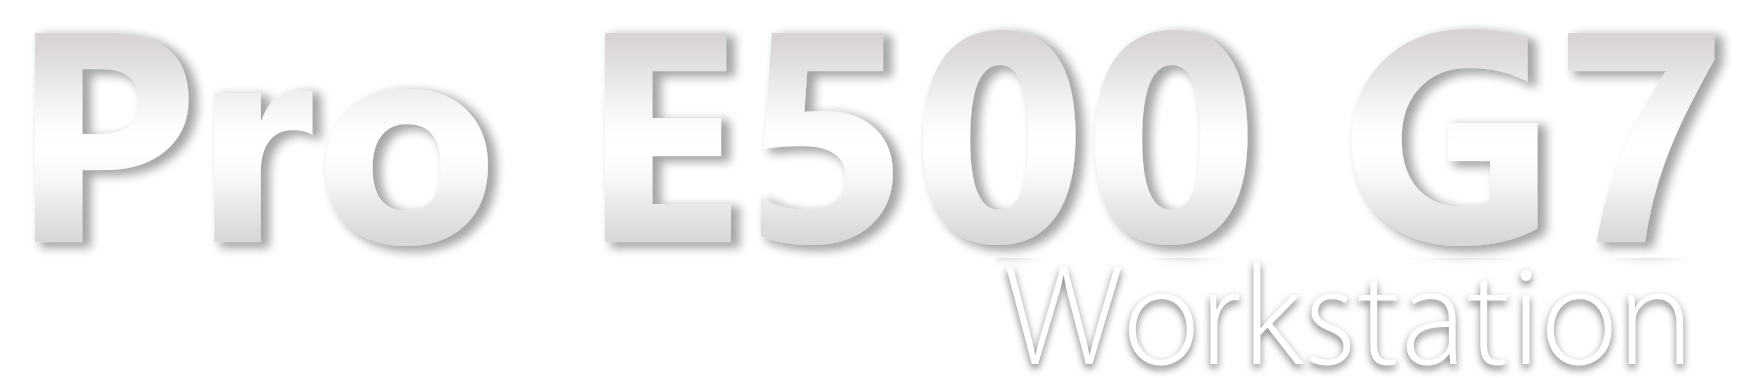 Pro E500 G7 Workstation